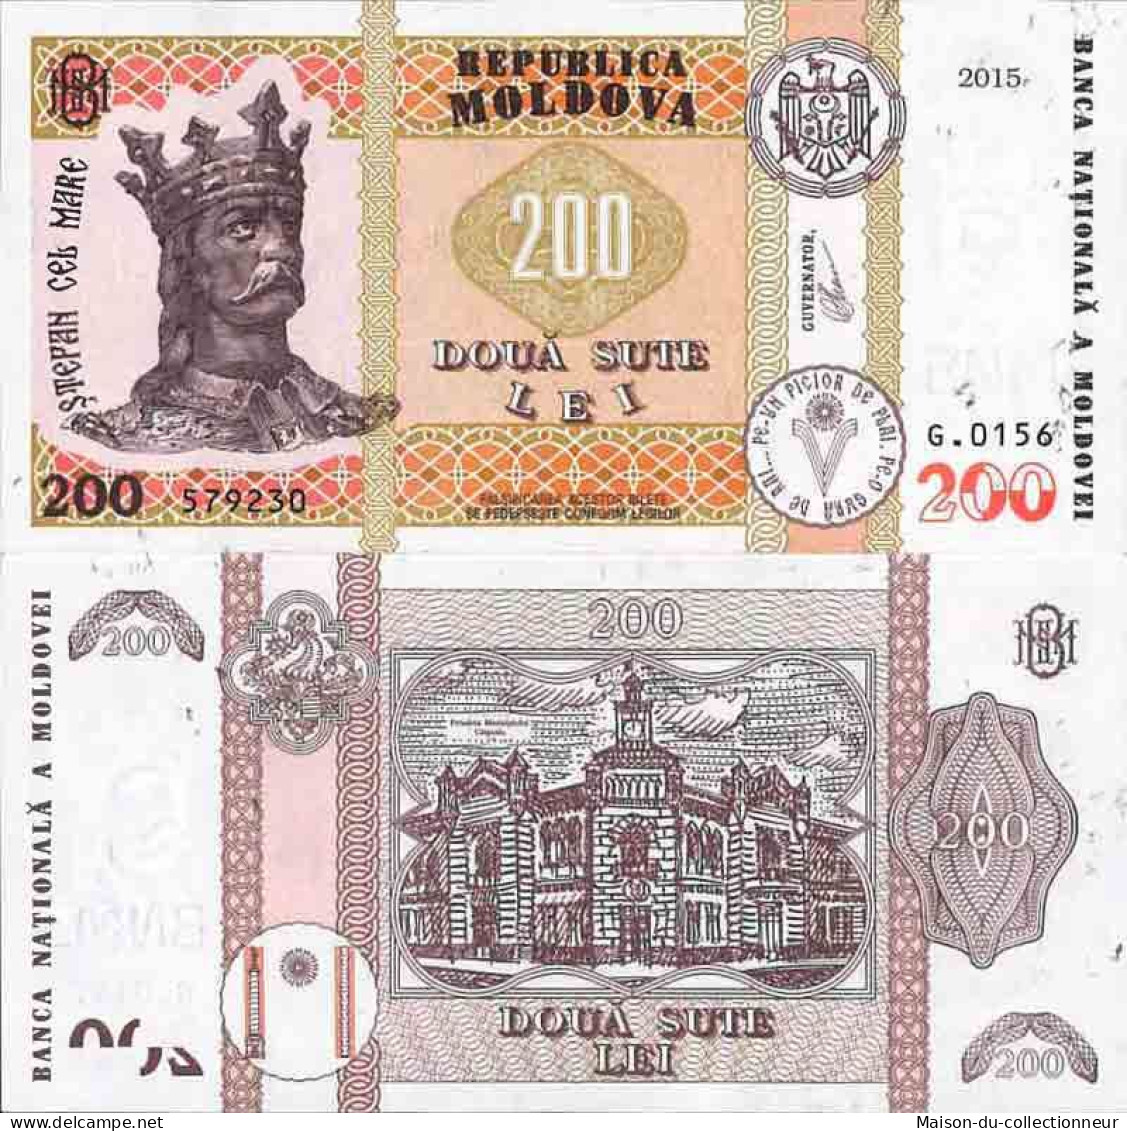 Billet De Banque Collection Moldavie - PK N° 26 - 200 LEI - Moldawien (Moldau)